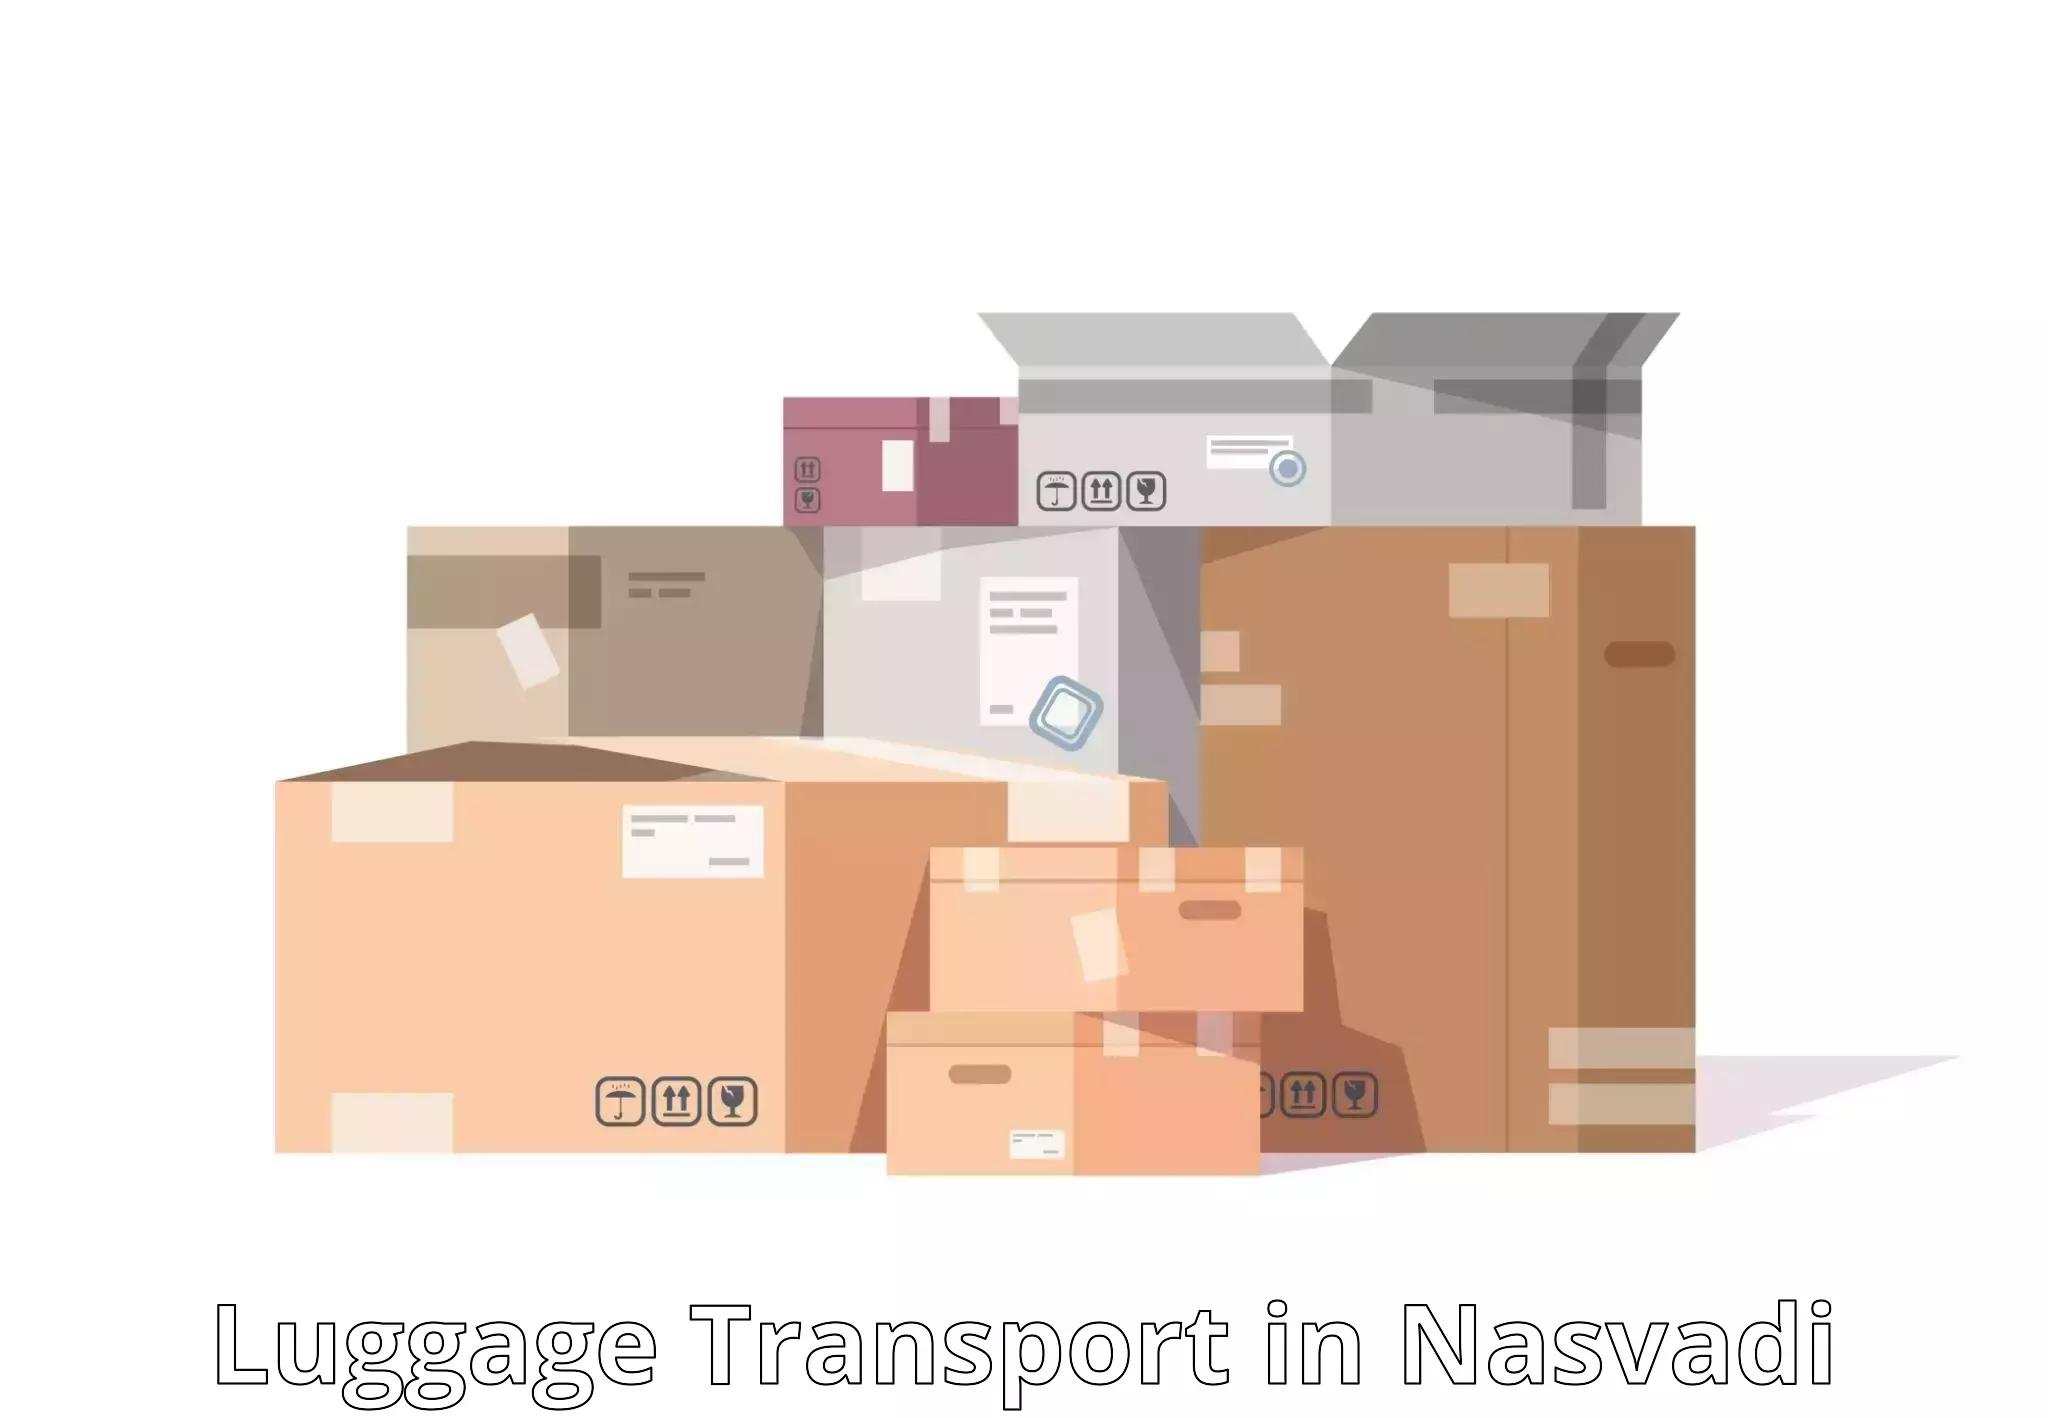 Baggage transport scheduler in Nasvadi